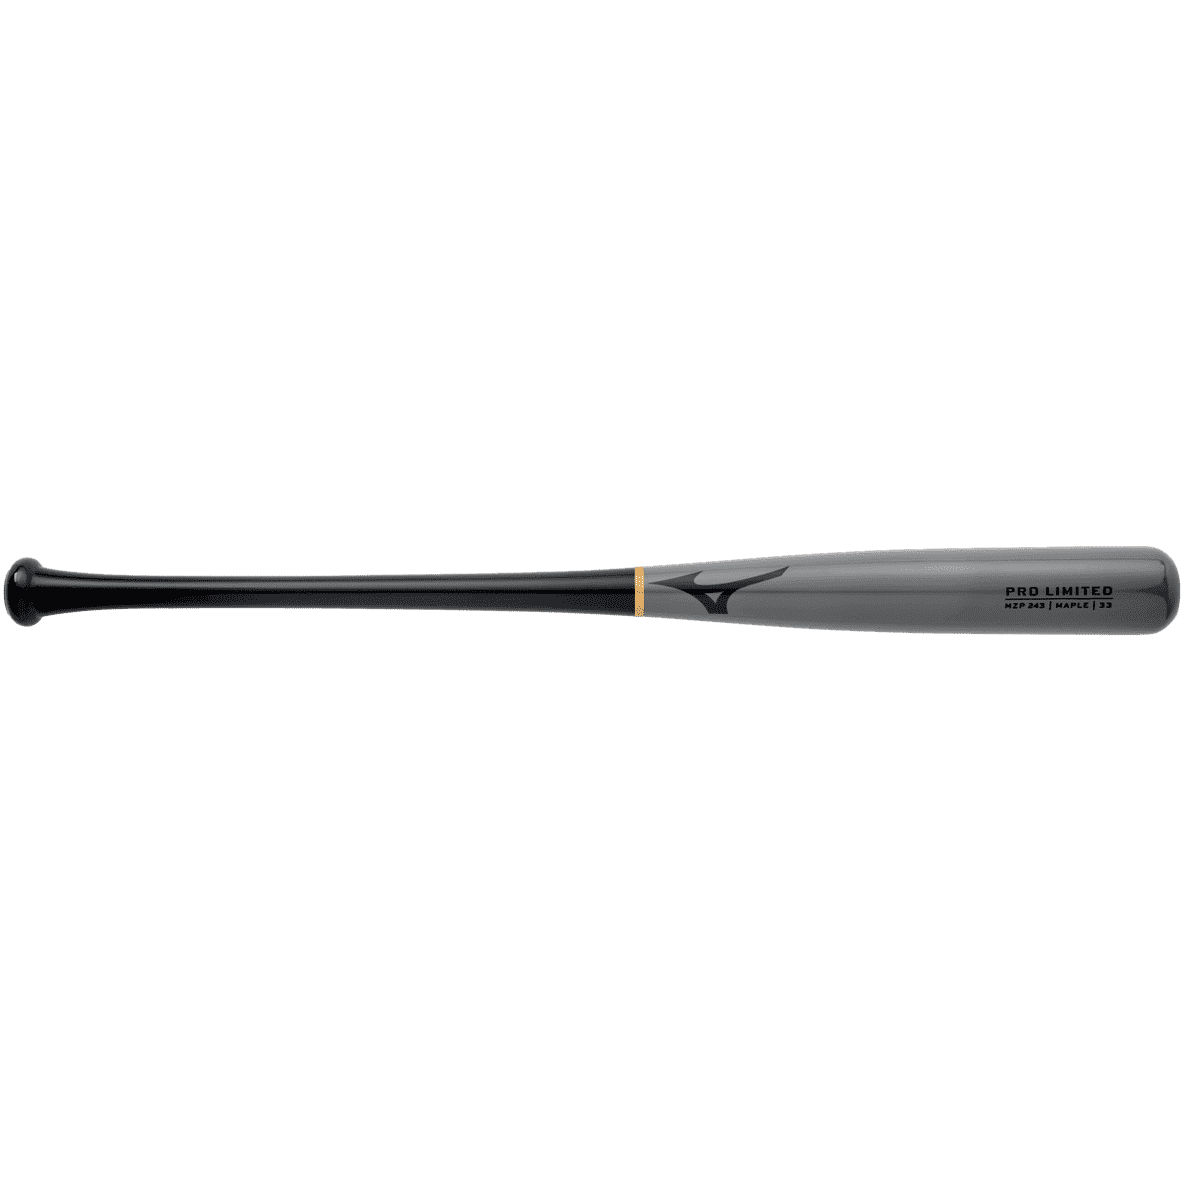 Mizuno Mzp 243 Pro Limited Maple Wood Baseball Bat - Gray Black - HIT a Double